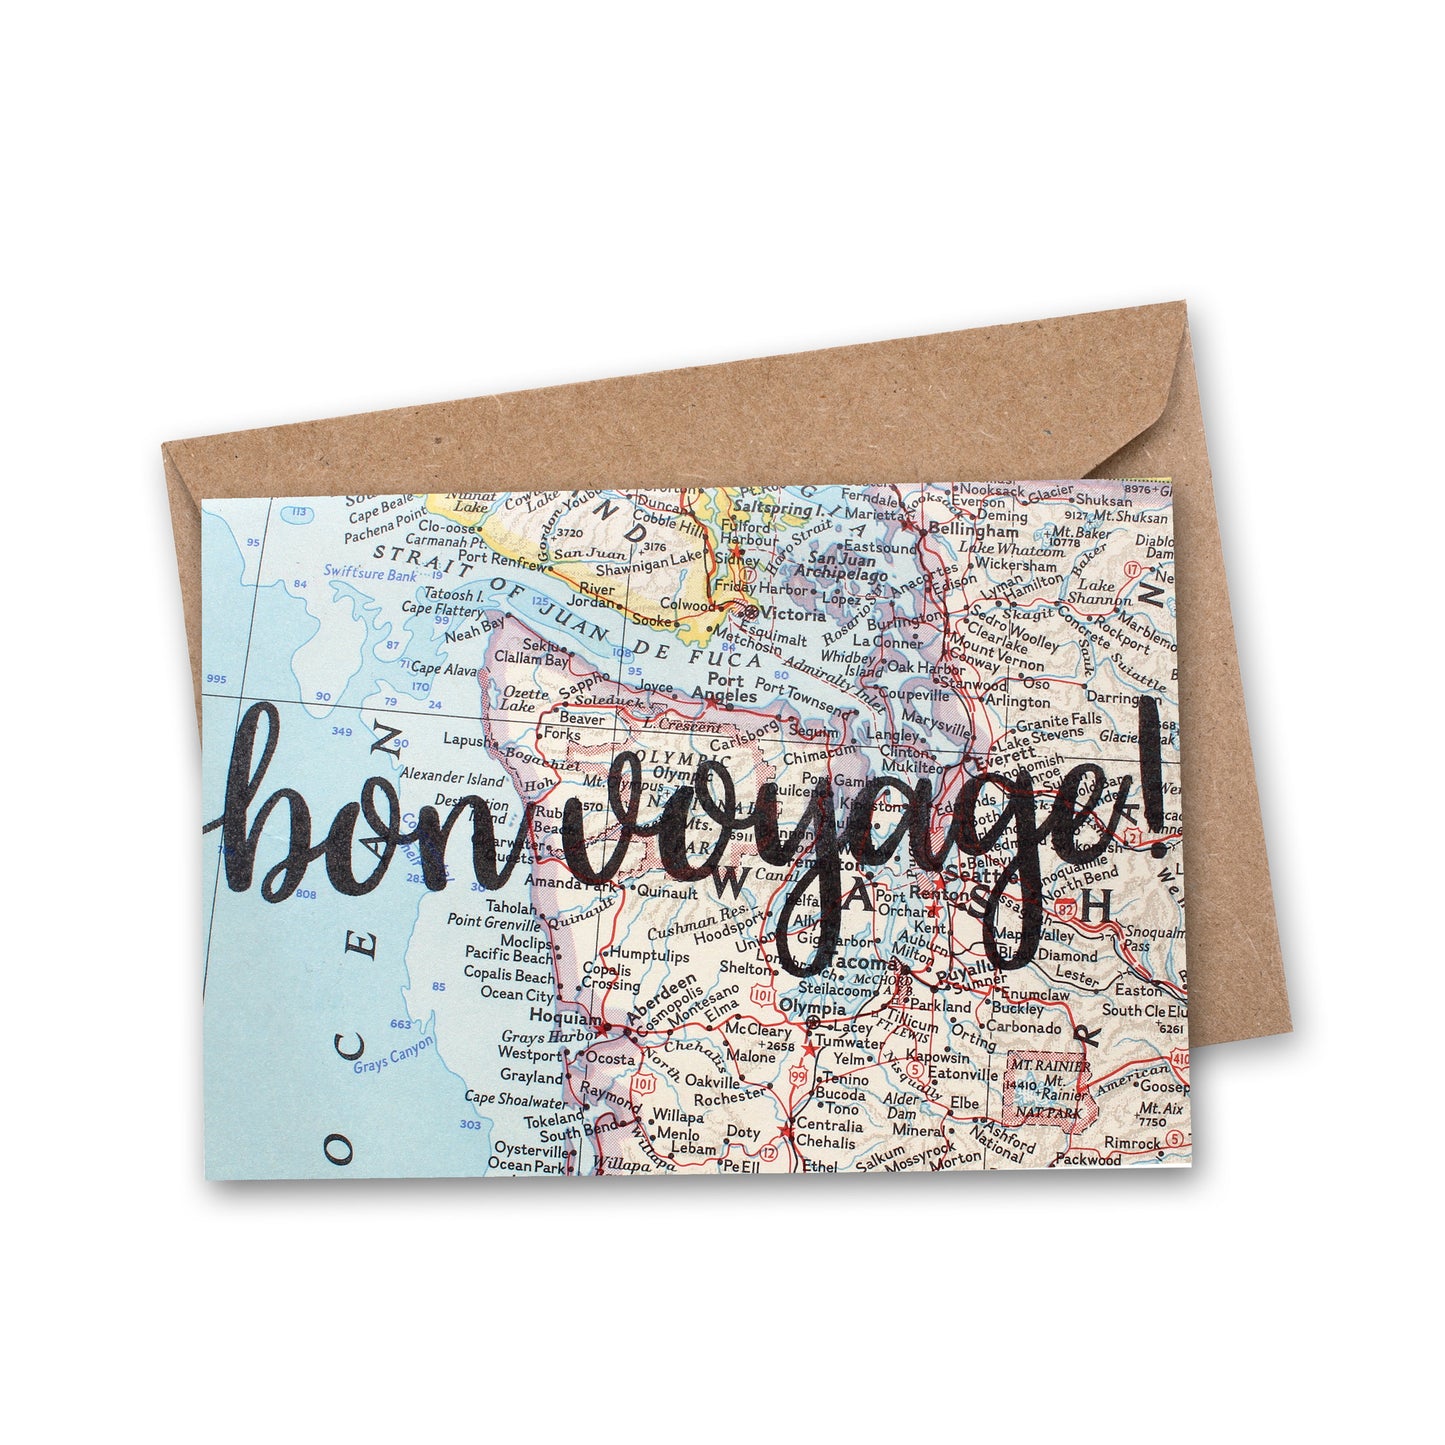 bon voyage greeting card hand lettered printed on vintage map